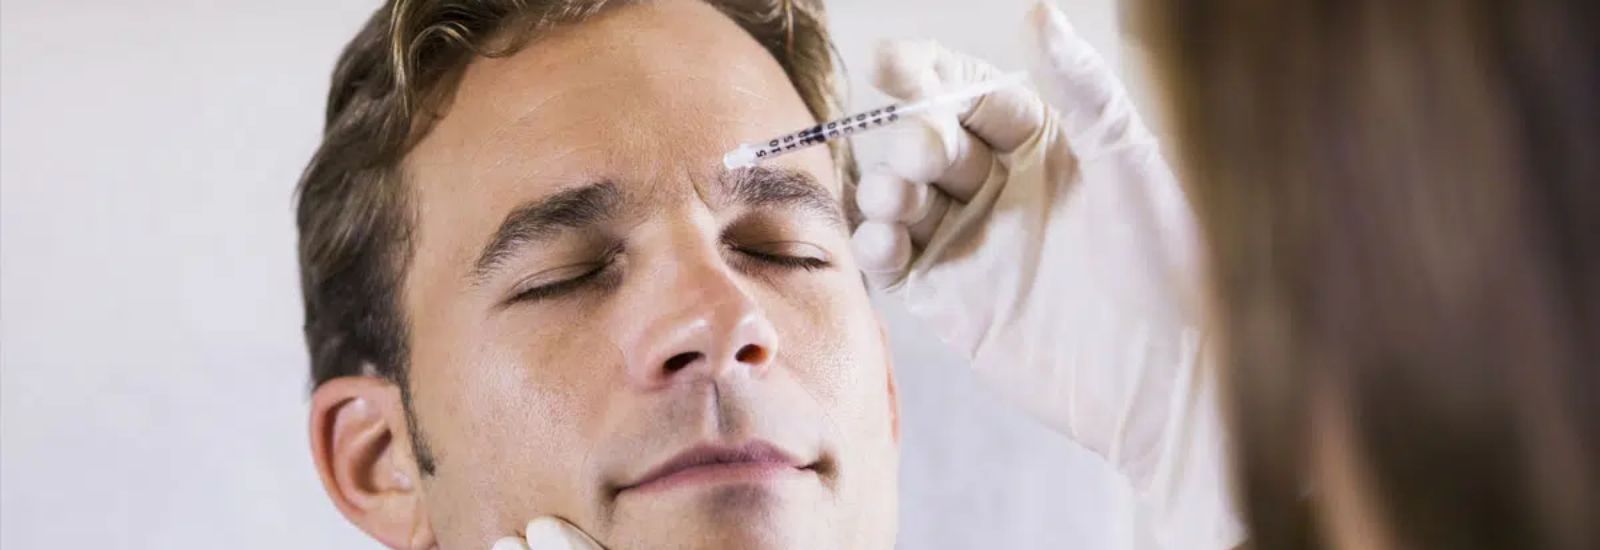 Man undergoing botox treatment